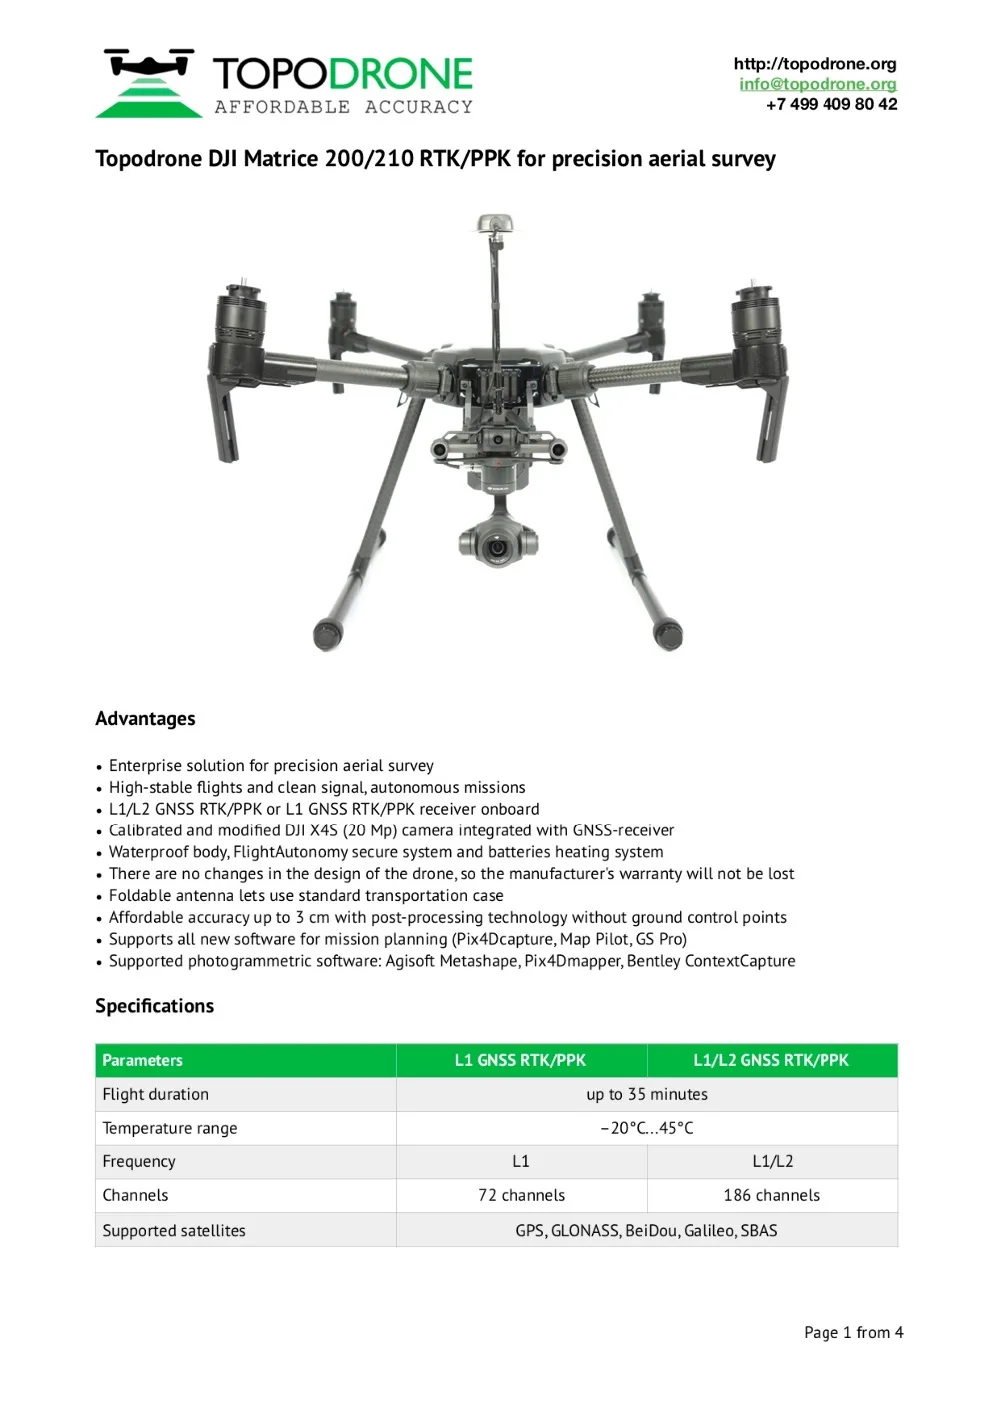 Topodrone DJI M200/M210 RTK/PPK для прецизионной аэрофотосъемки дроны самолет Max fly 30 км